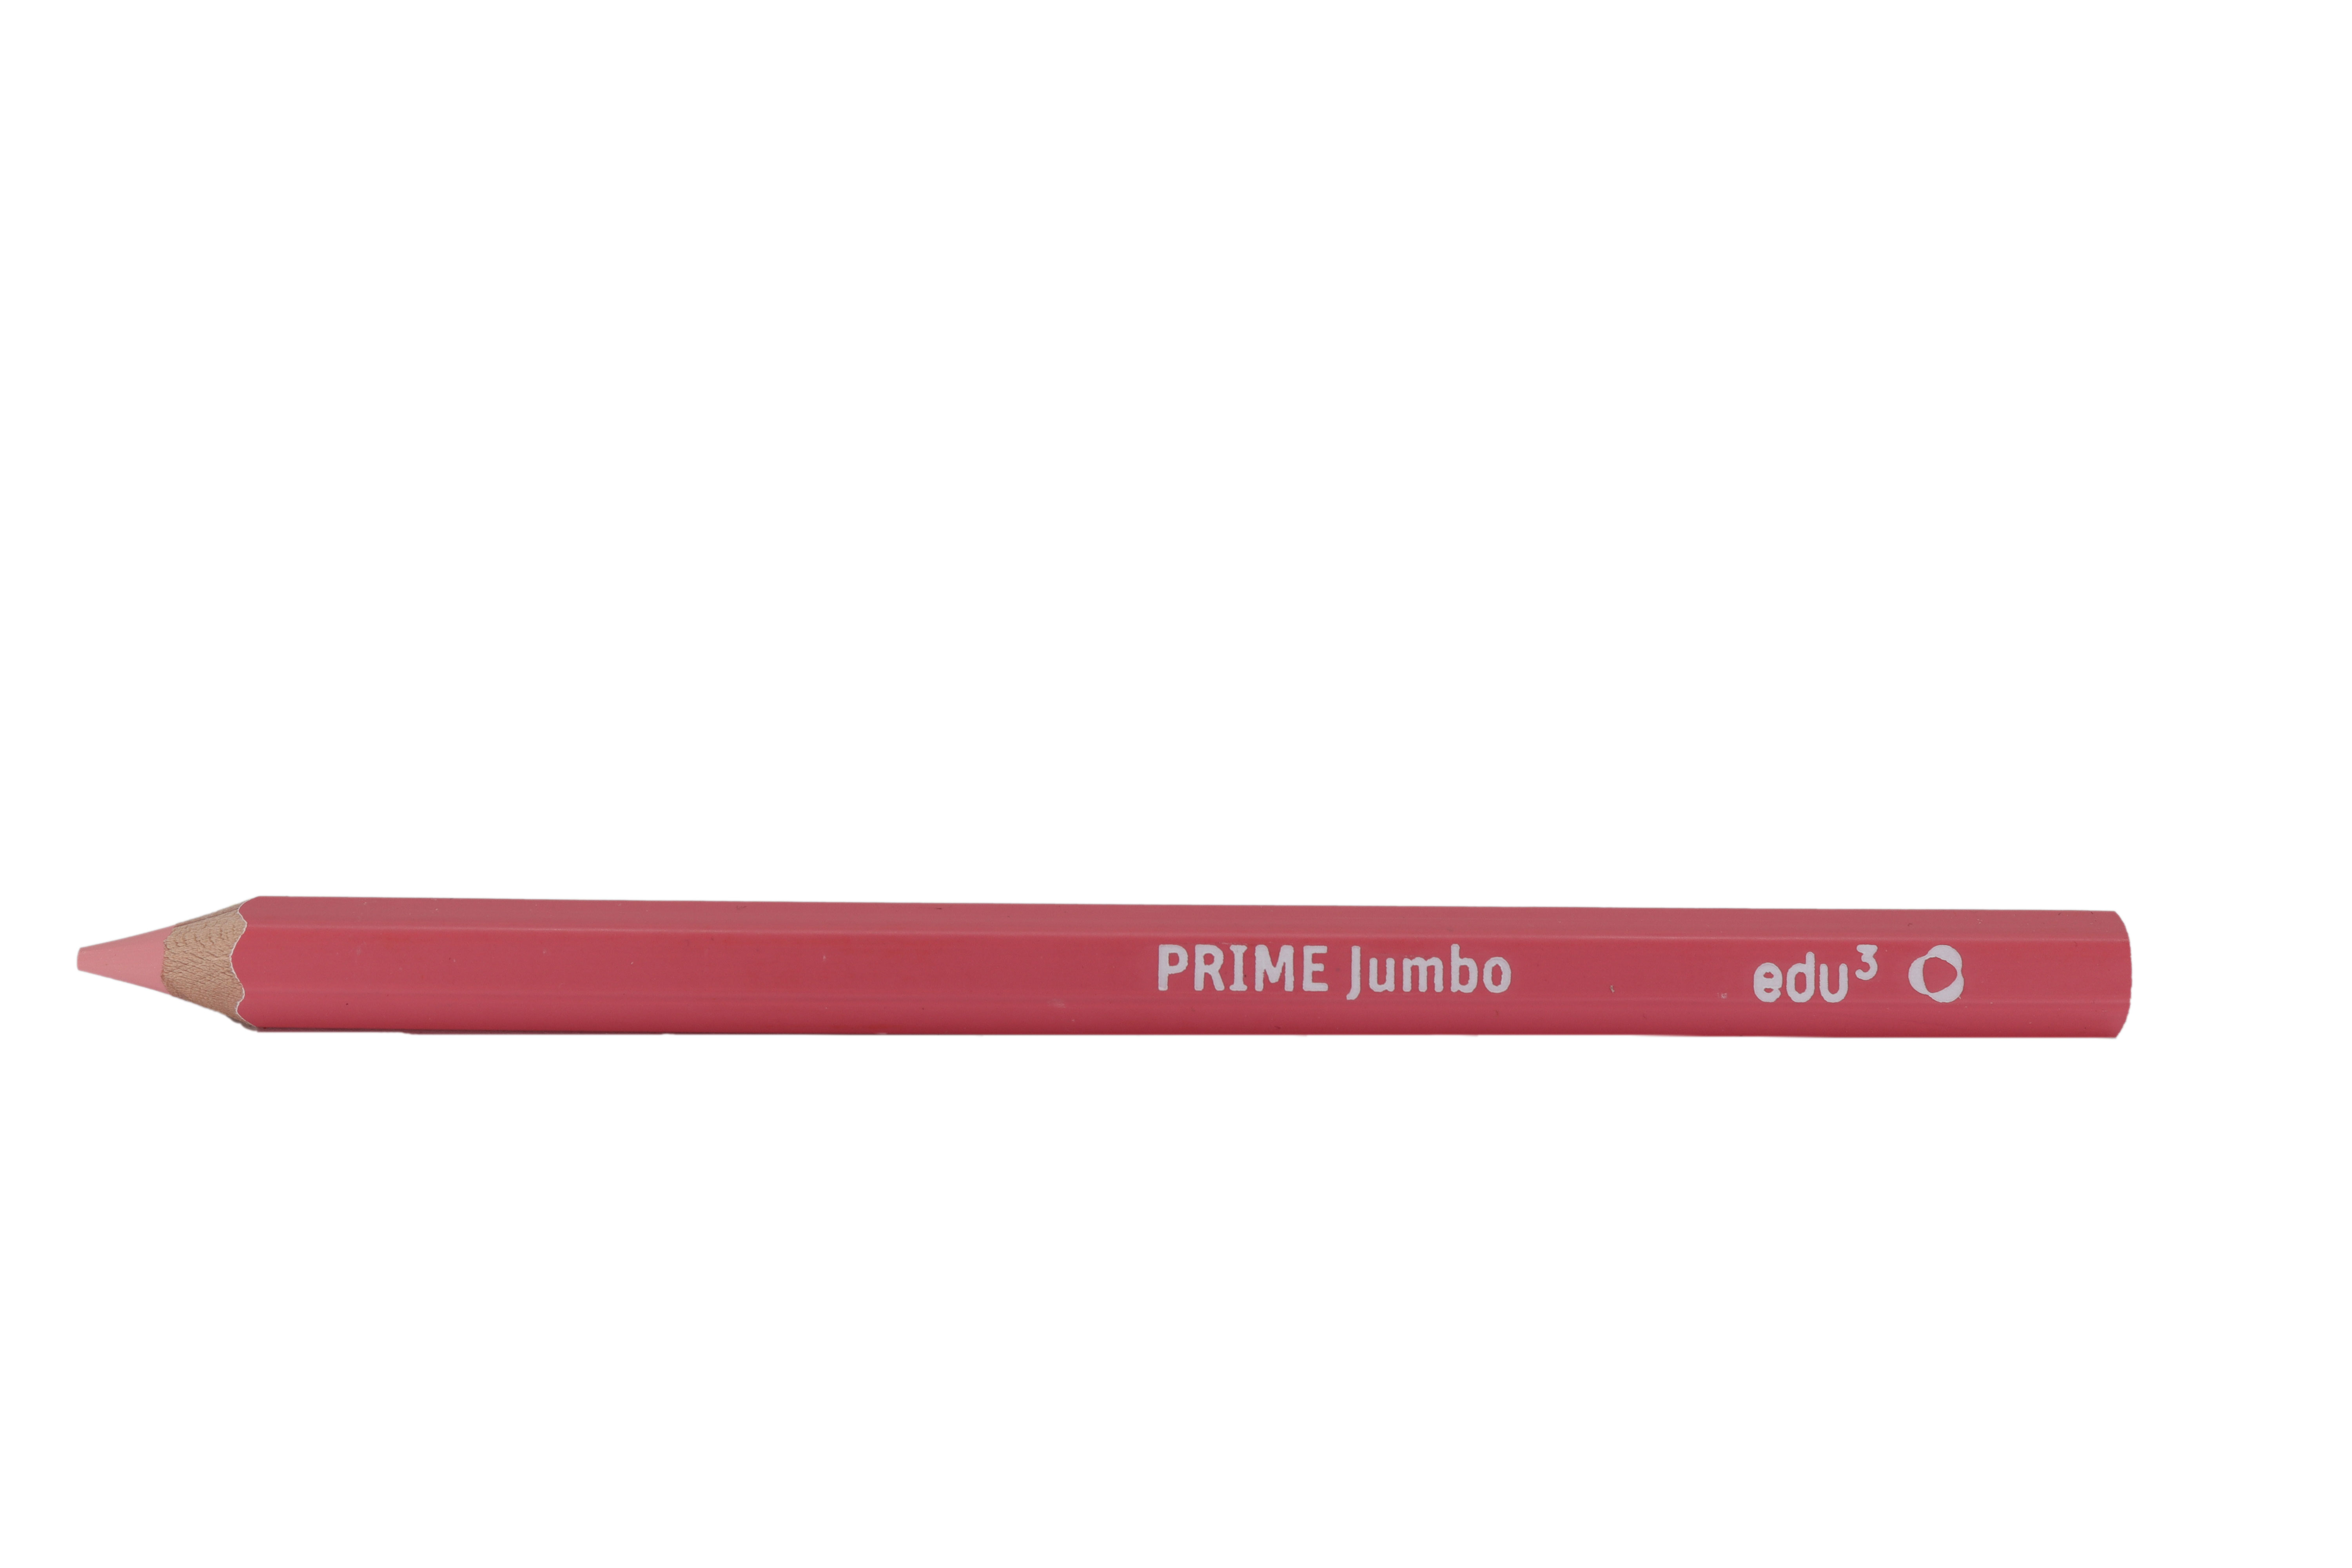 edu³ PRIME Jumbo colored pencils hex light pink